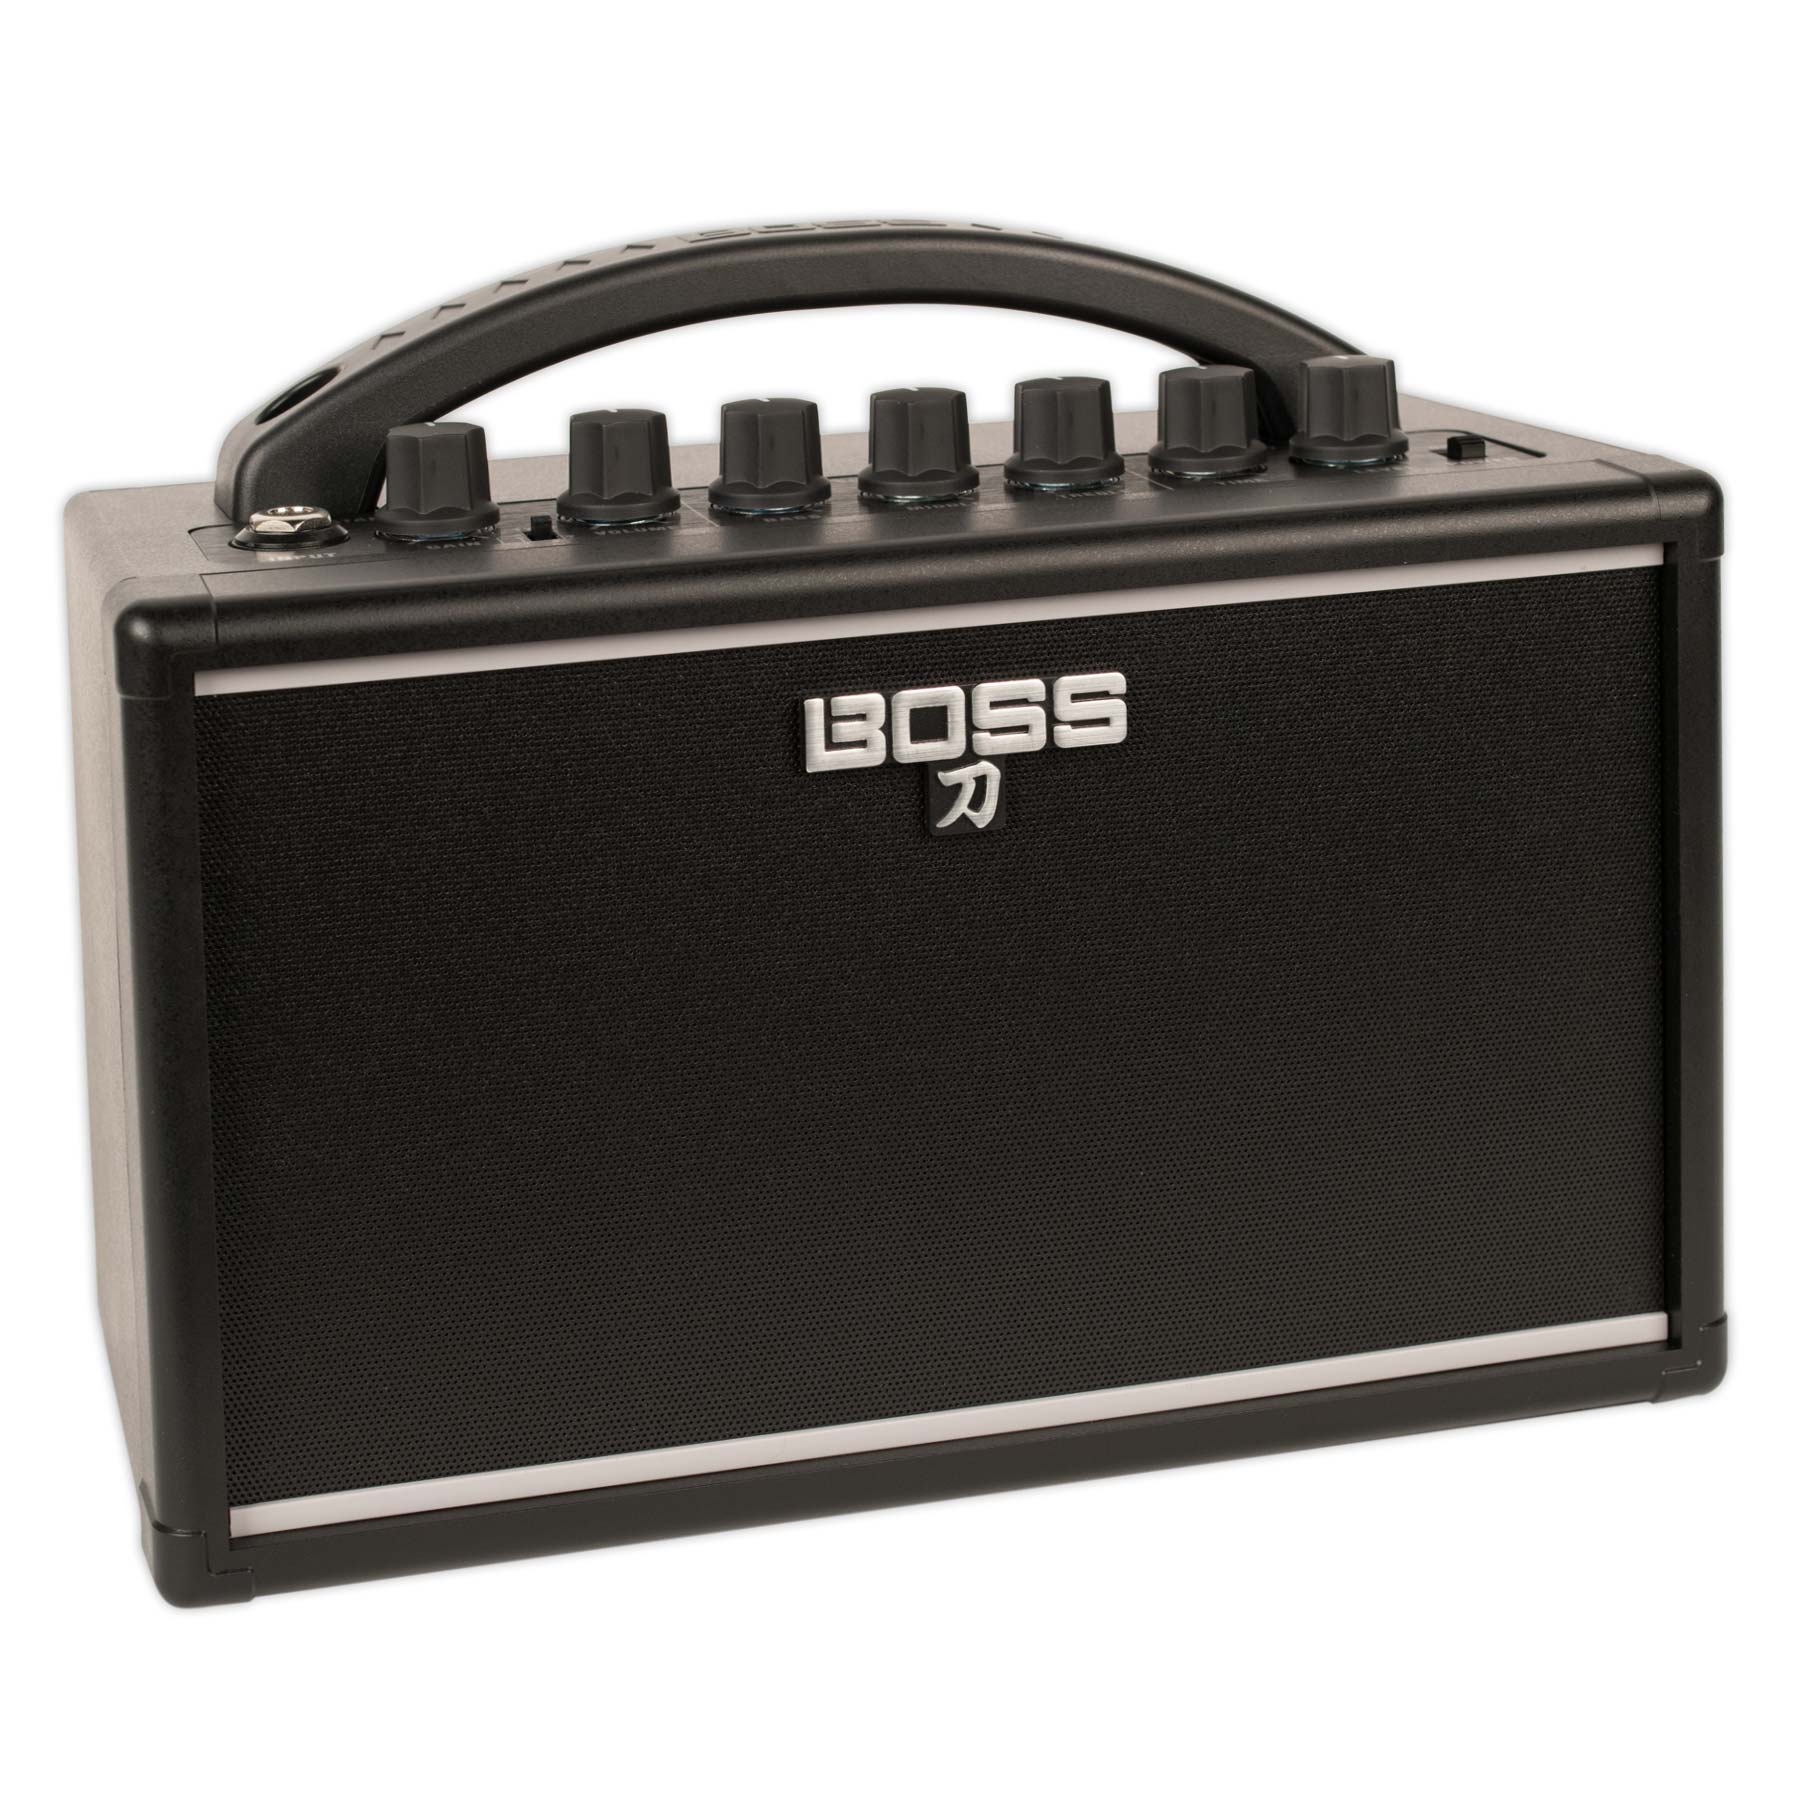 boss katana mini guitar amplifier